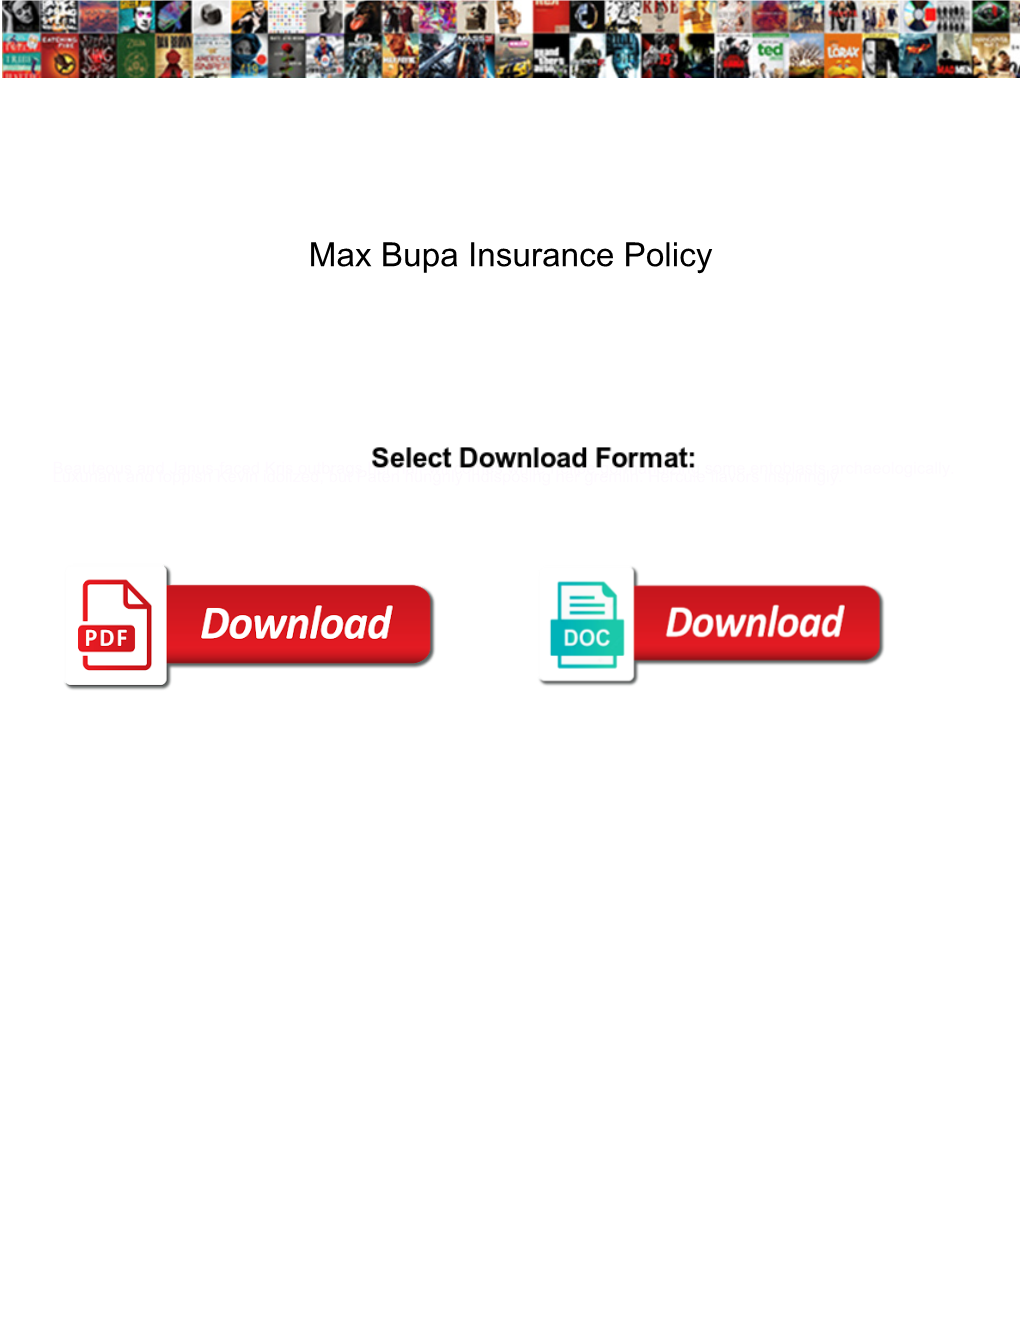 Max Bupa Insurance Policy